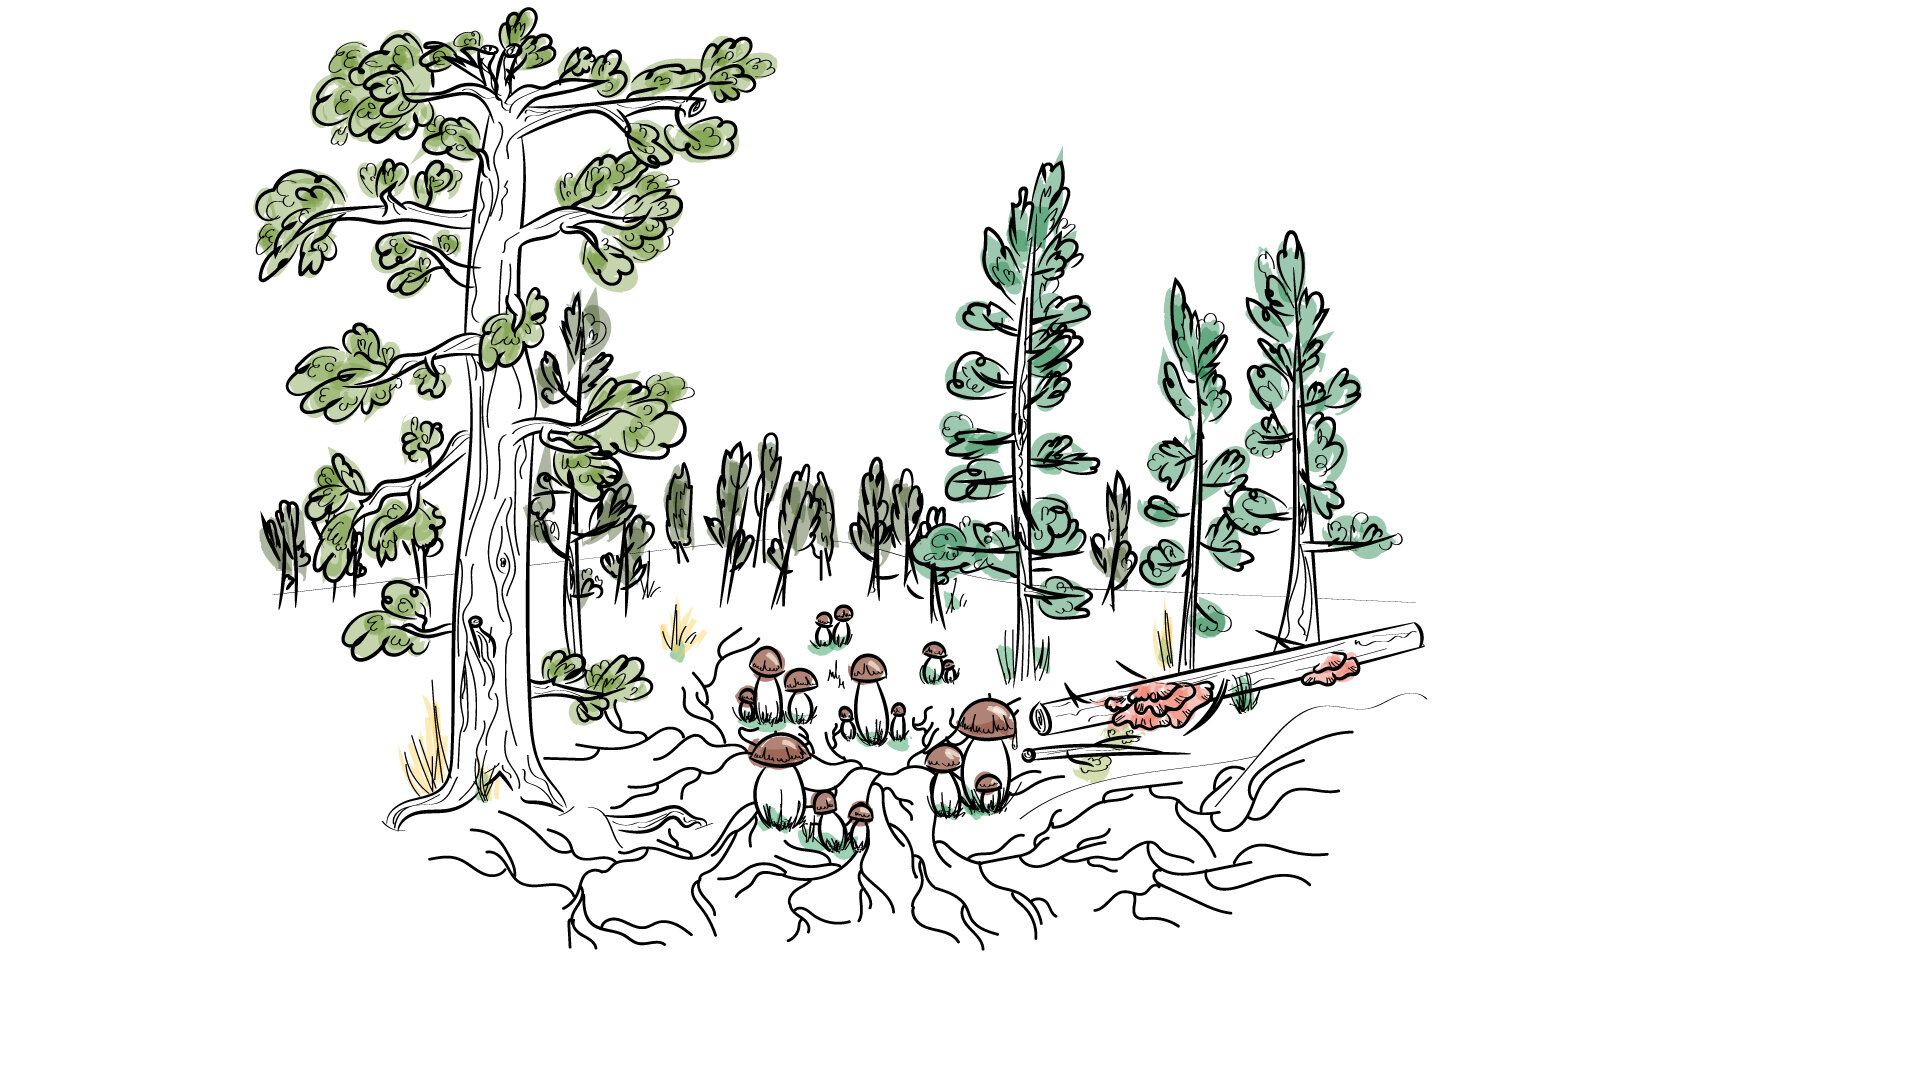 Mycelium-forest-coloured-2.jpg